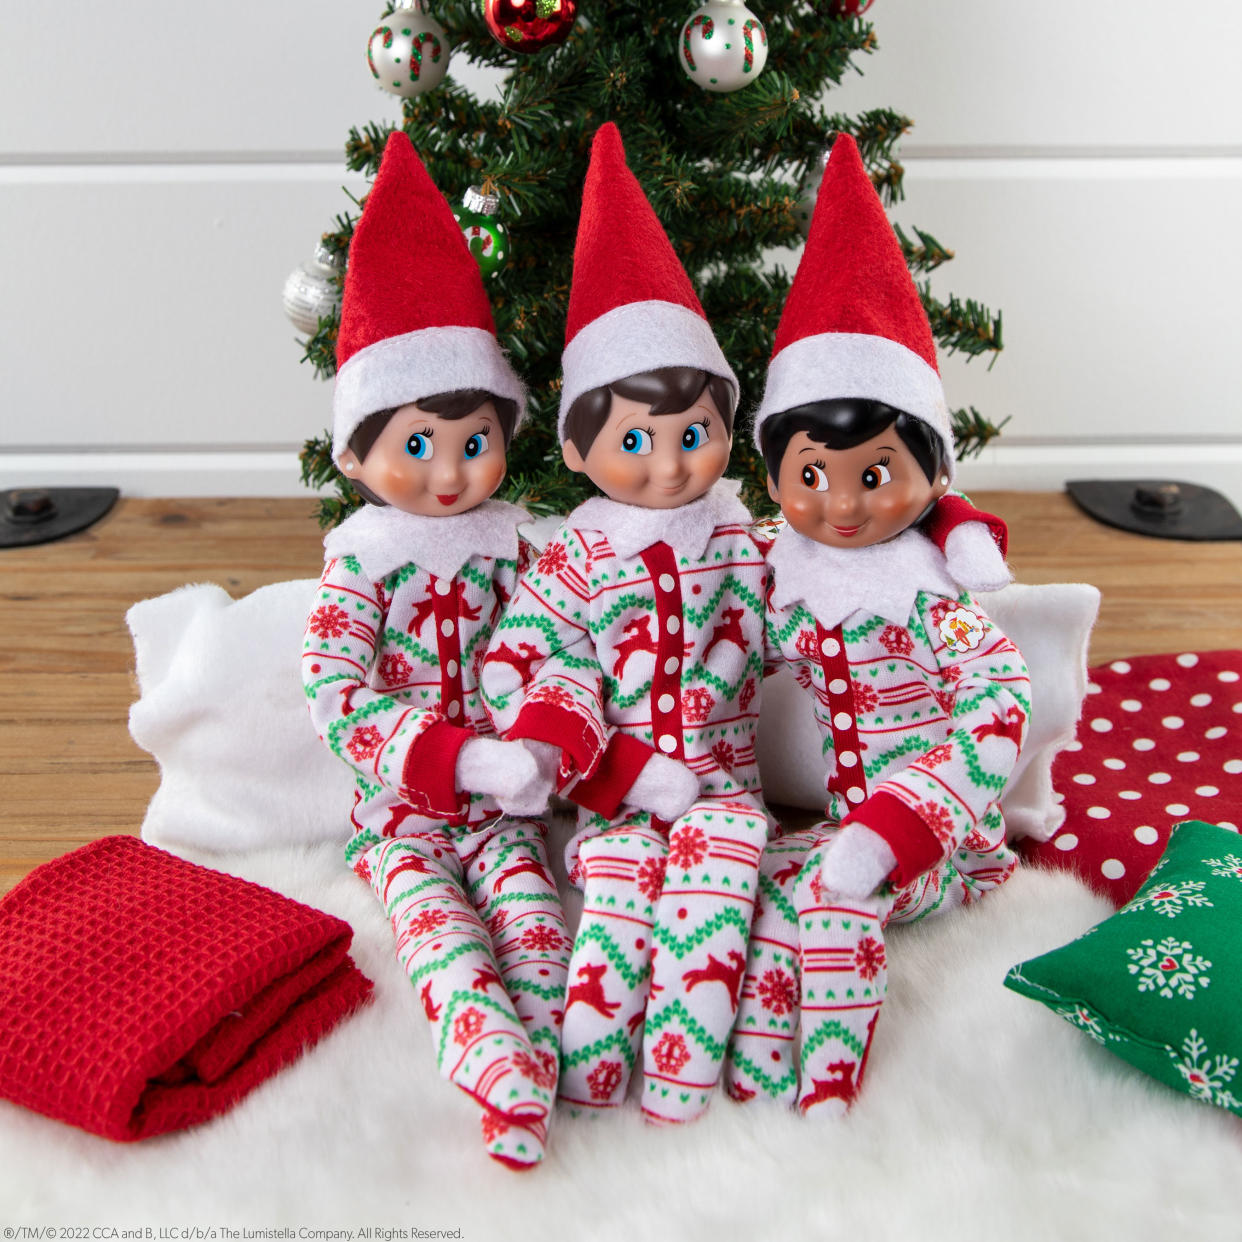 elves on shelf (The Lumistella Company, home of The Elf on The Shelf®)